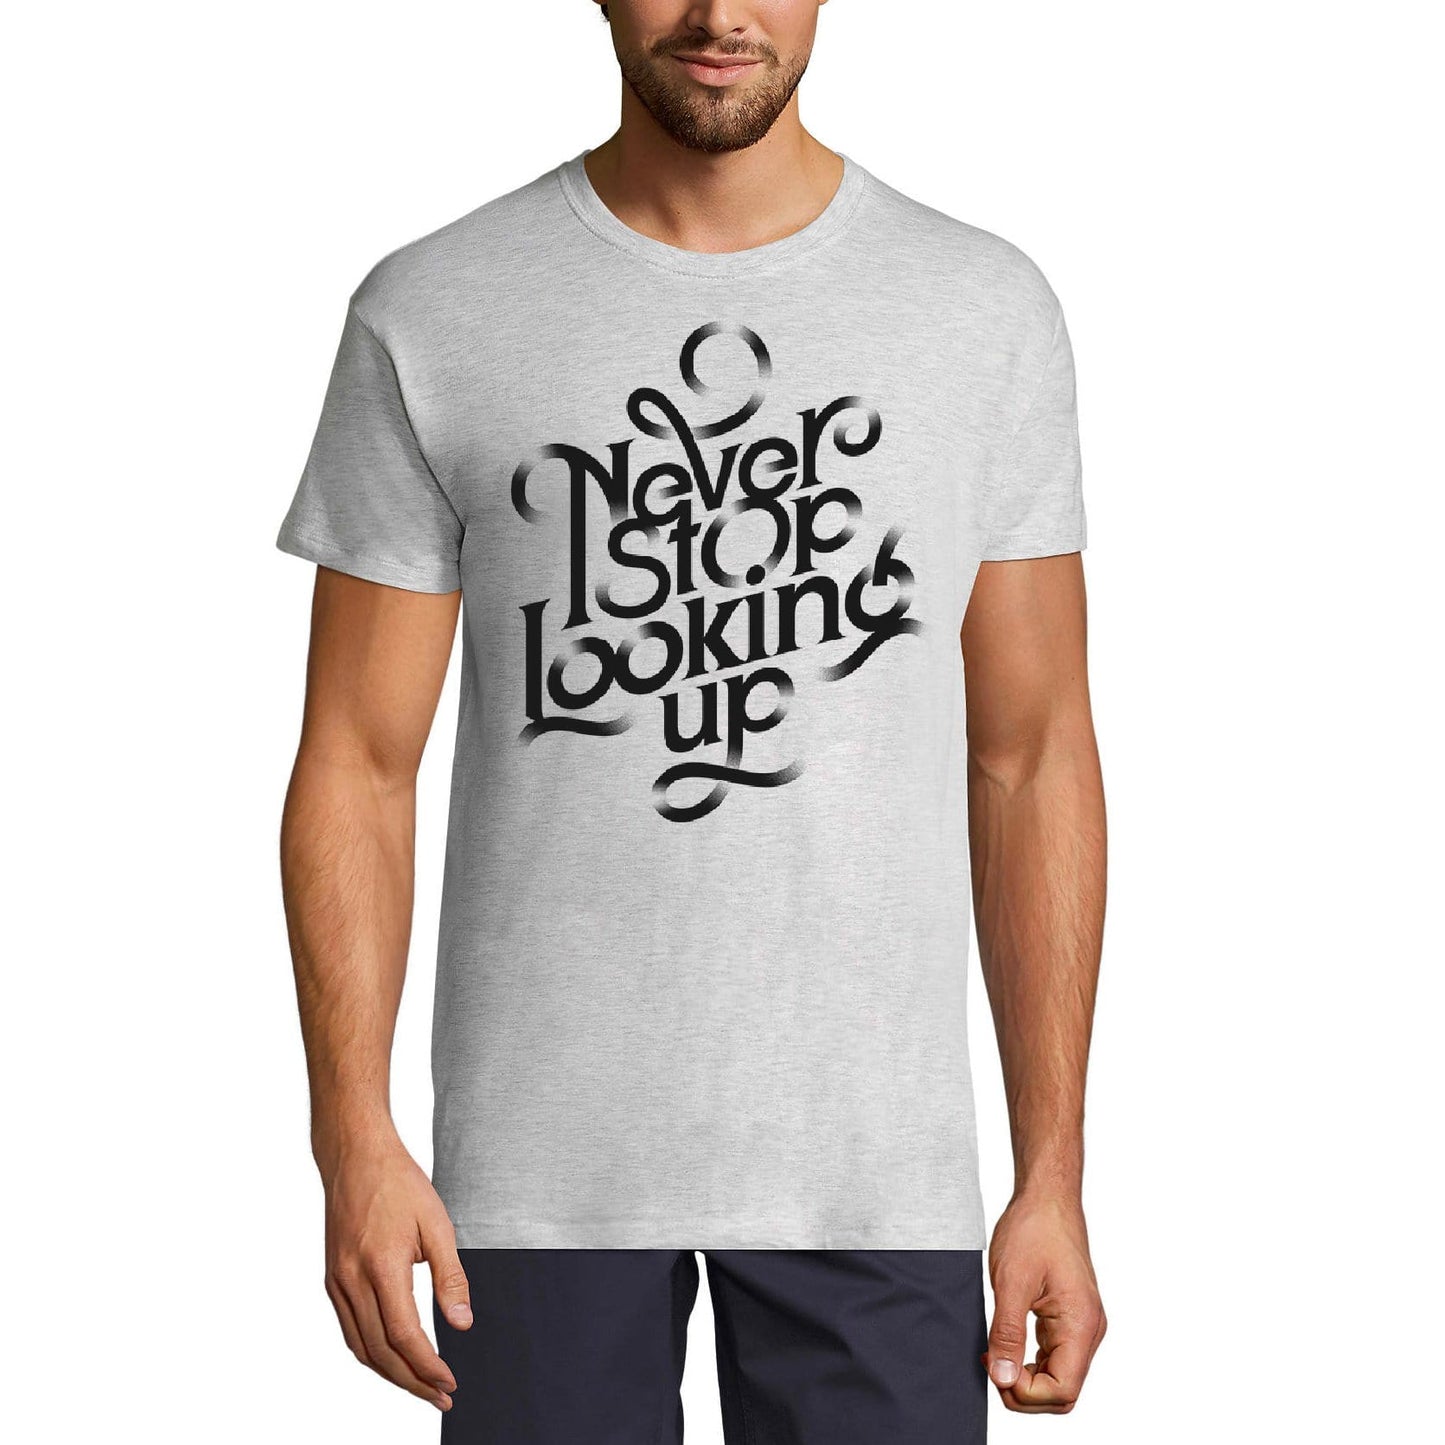 ULTRABASIC Men's T-Shirt Never Stop Looking Up - Short Sleeve Tee shirt